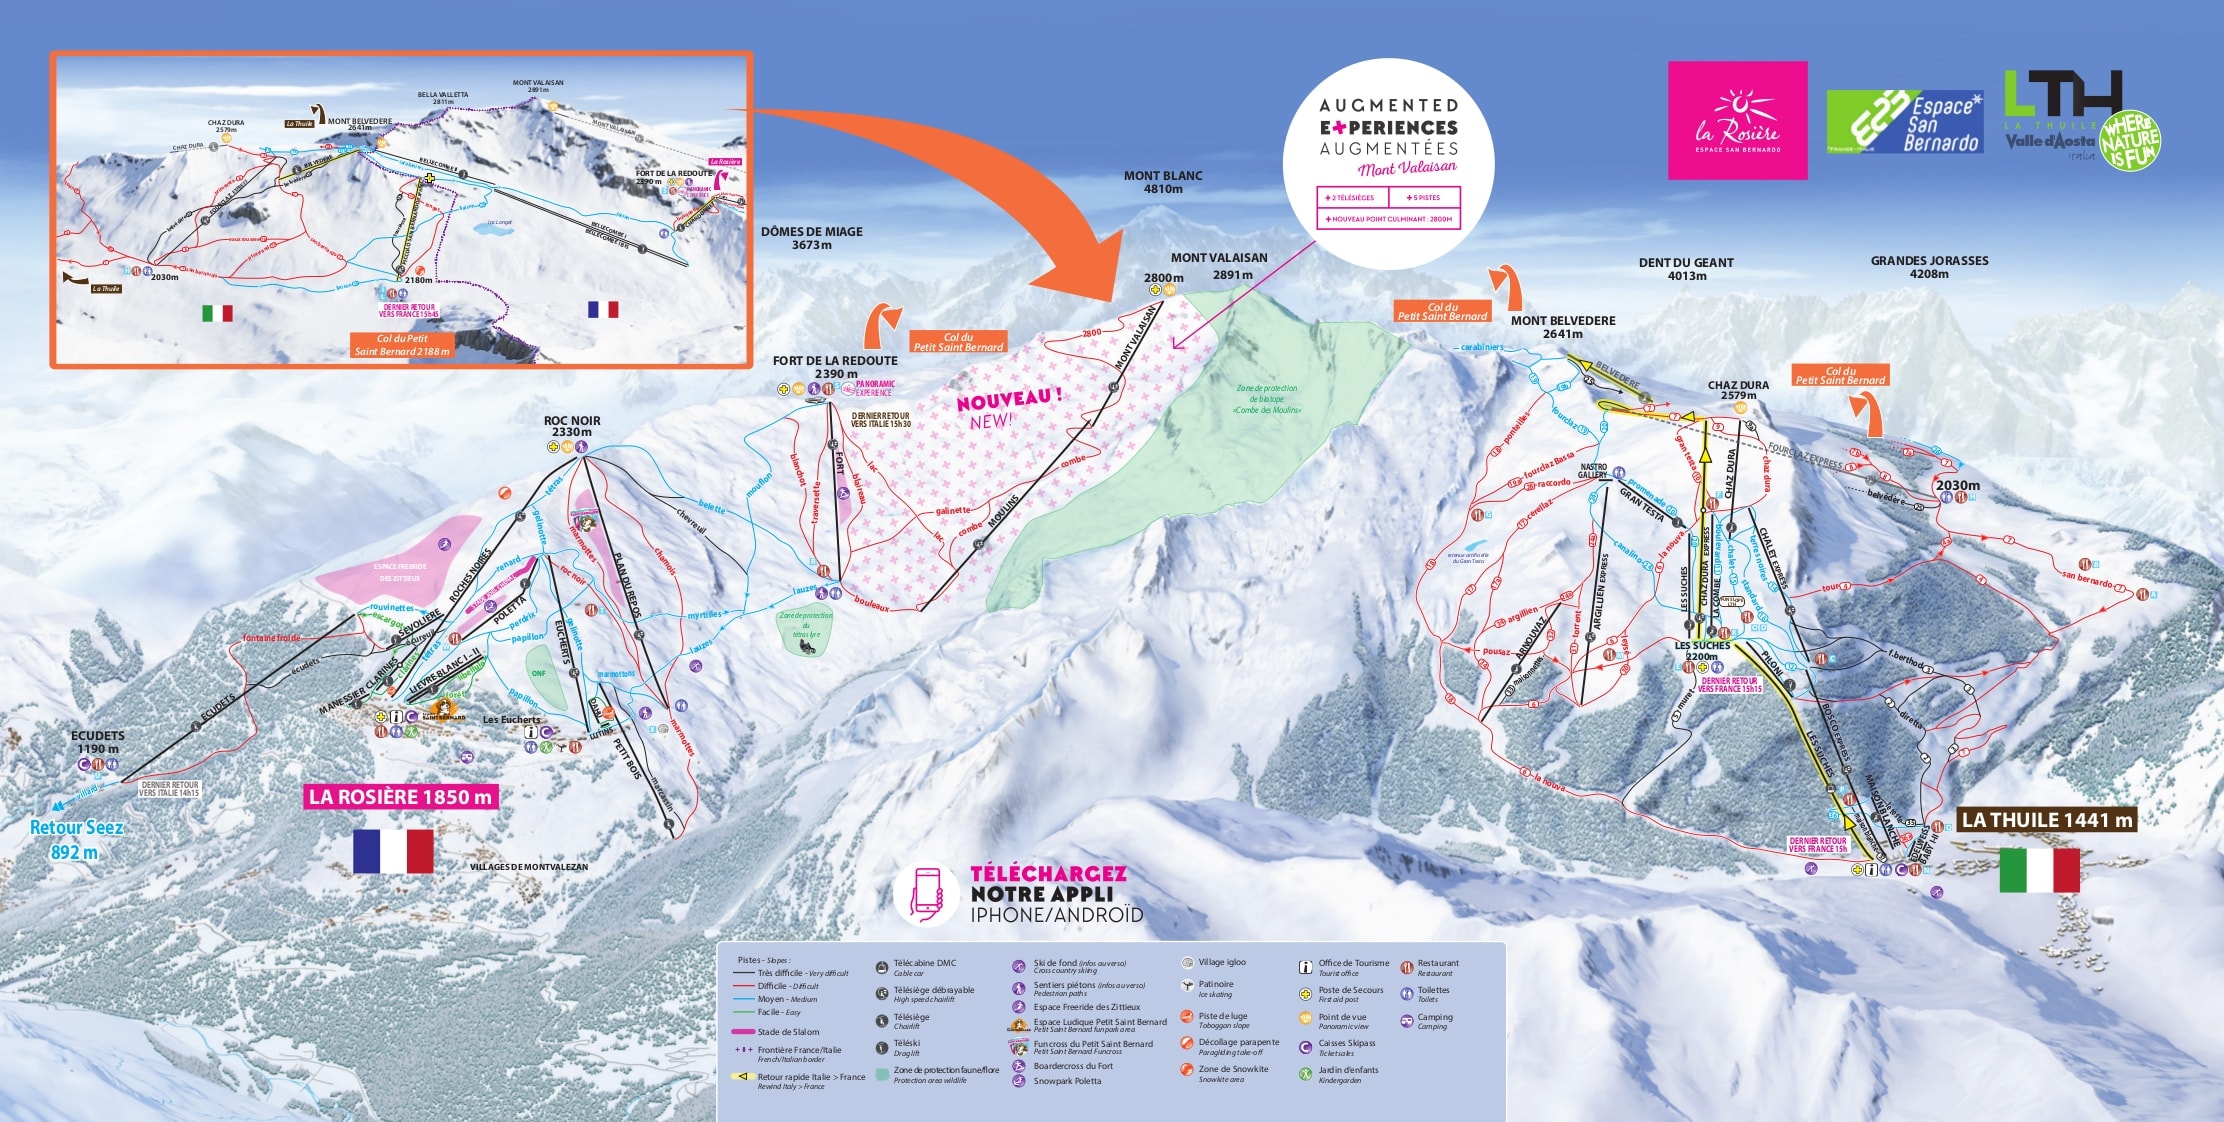 La Rosiere Piste Map 2019 - Ski Europe - winter ski vacation deals in ...